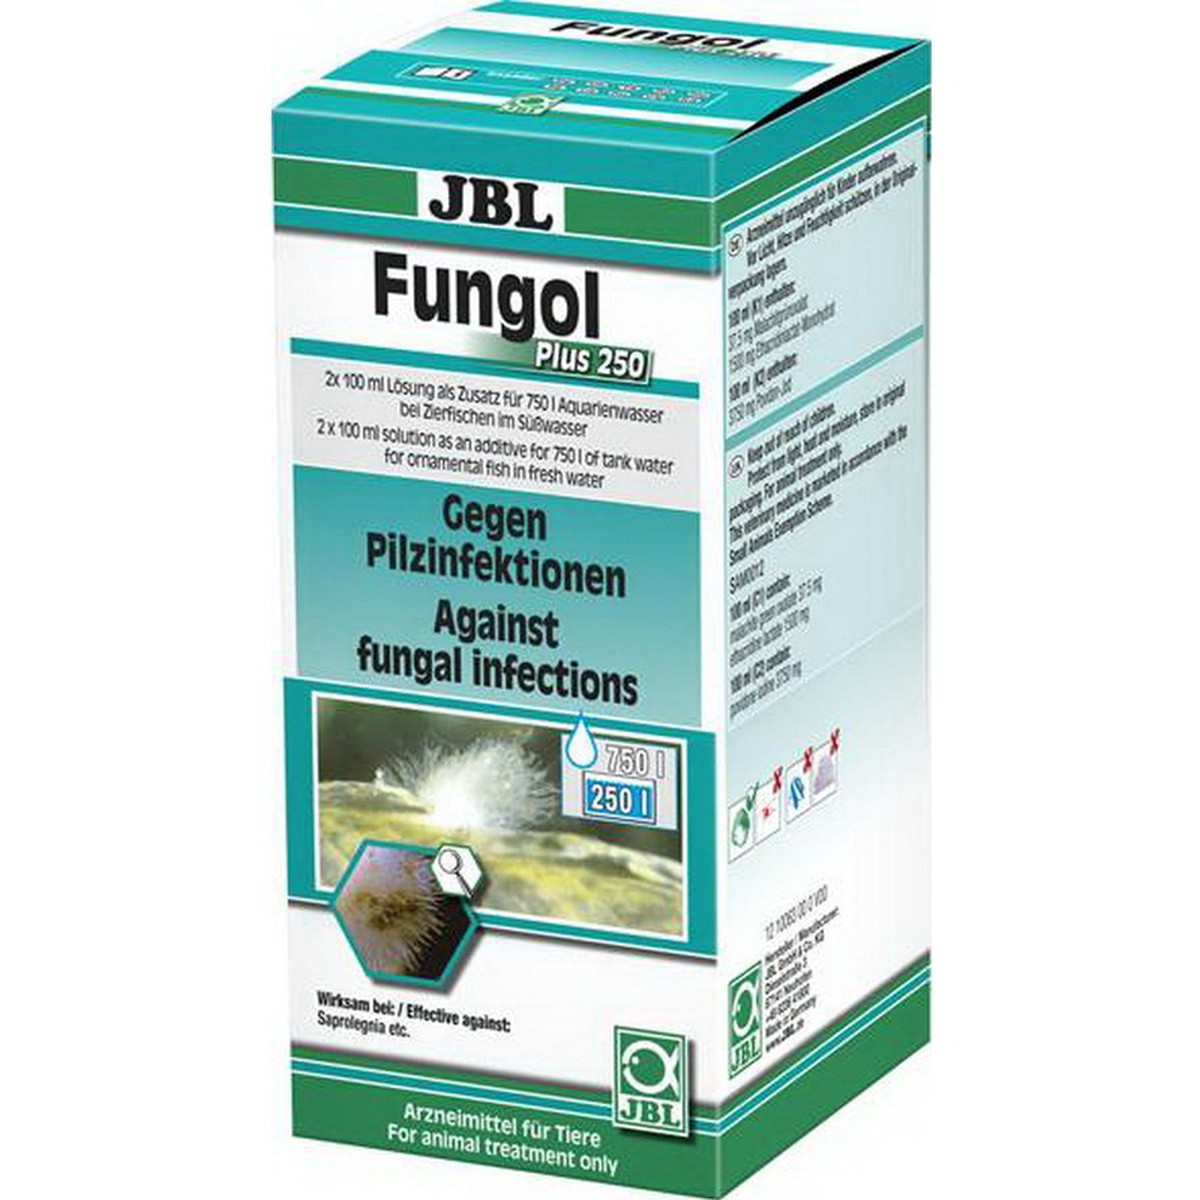   JBL Fungol Plus 250 200ml DE/FR  2x 100 ml